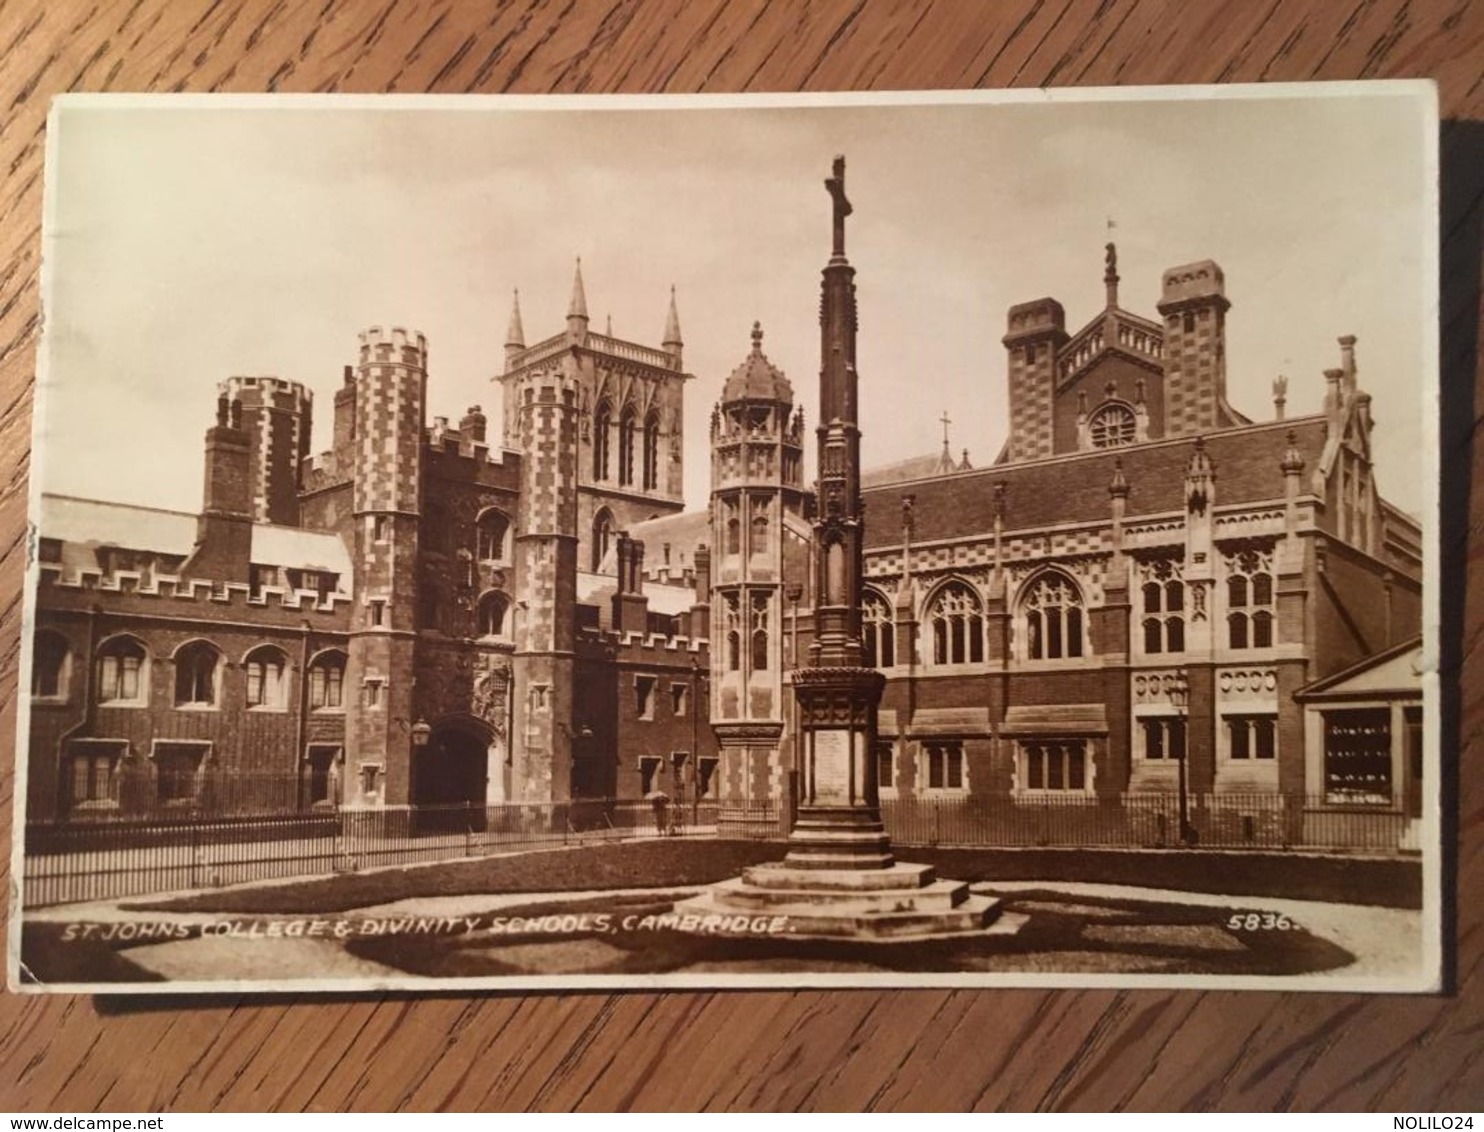 Cpa, ST JOHNS COLLEGE And DIVINITY SCHOOLS, CAMBRIDGE, écrite En 1939, Timbre, "éd Real Photo" - Cambridge